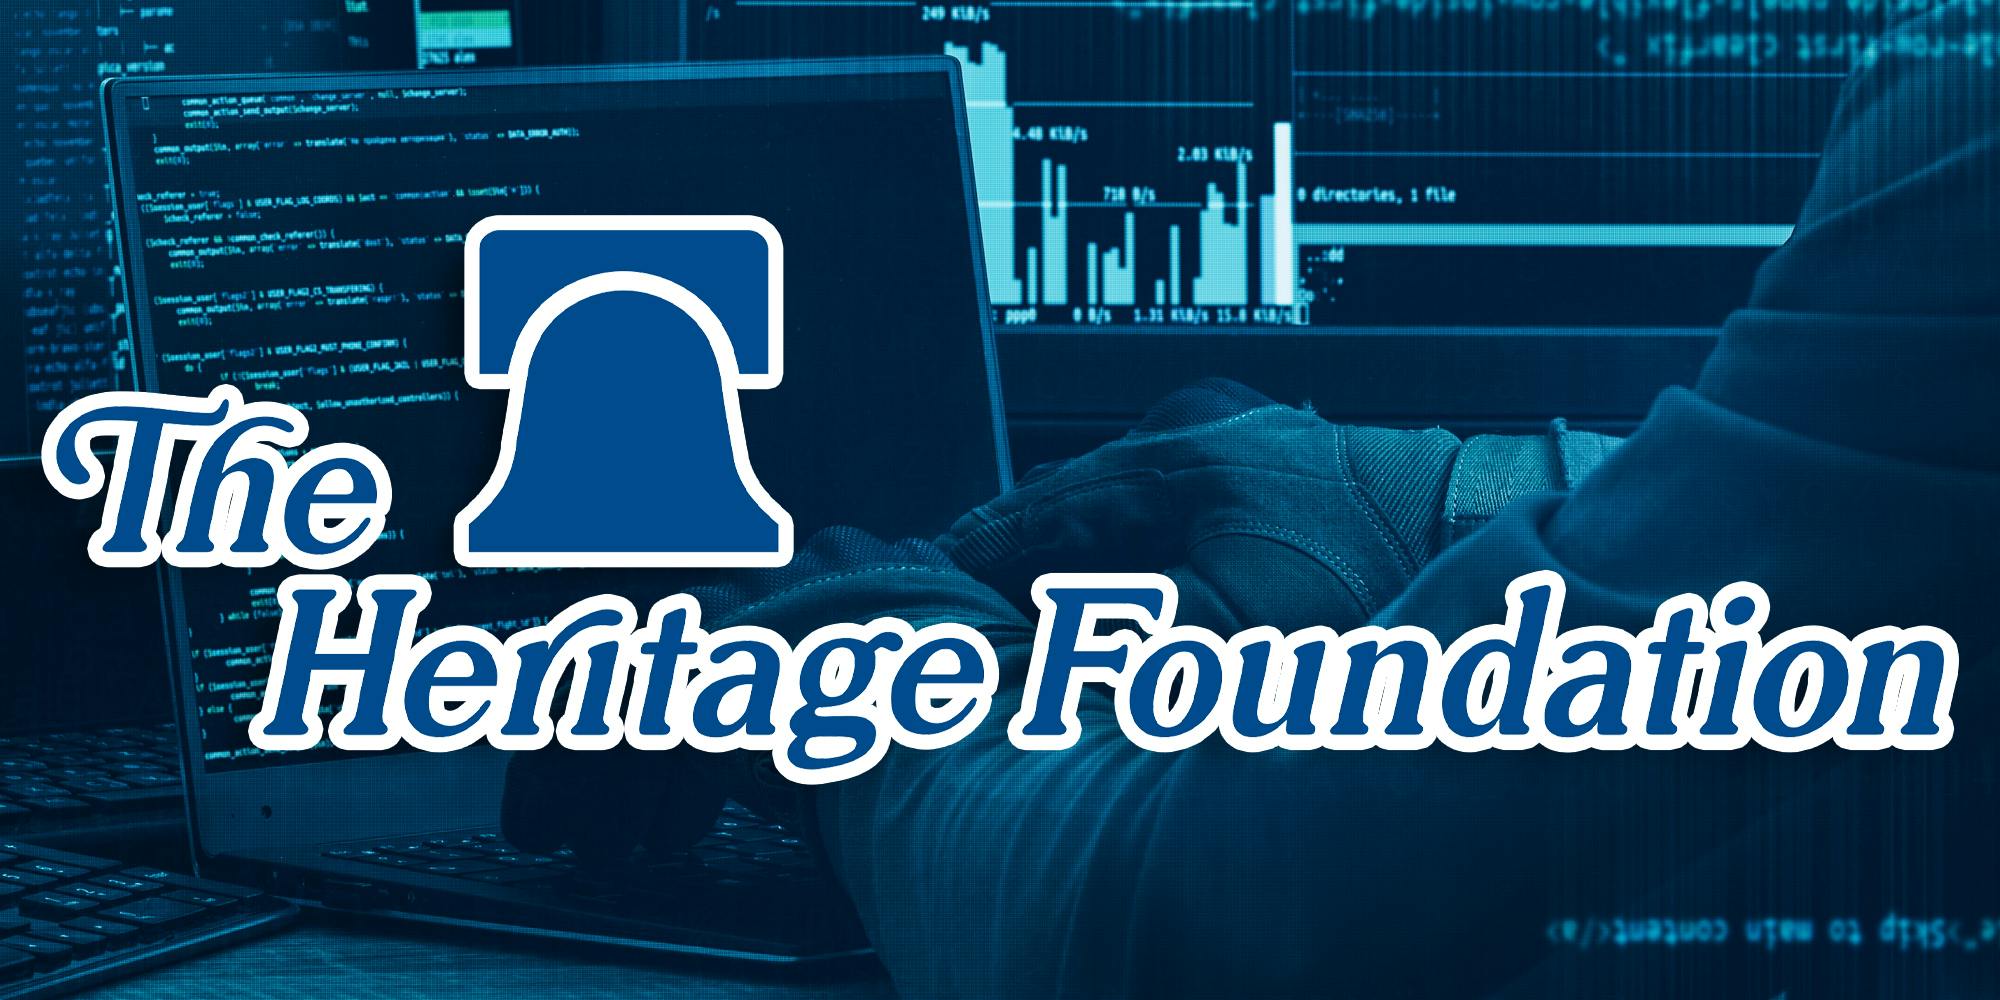 The Heritage Foundation logo over hacker image